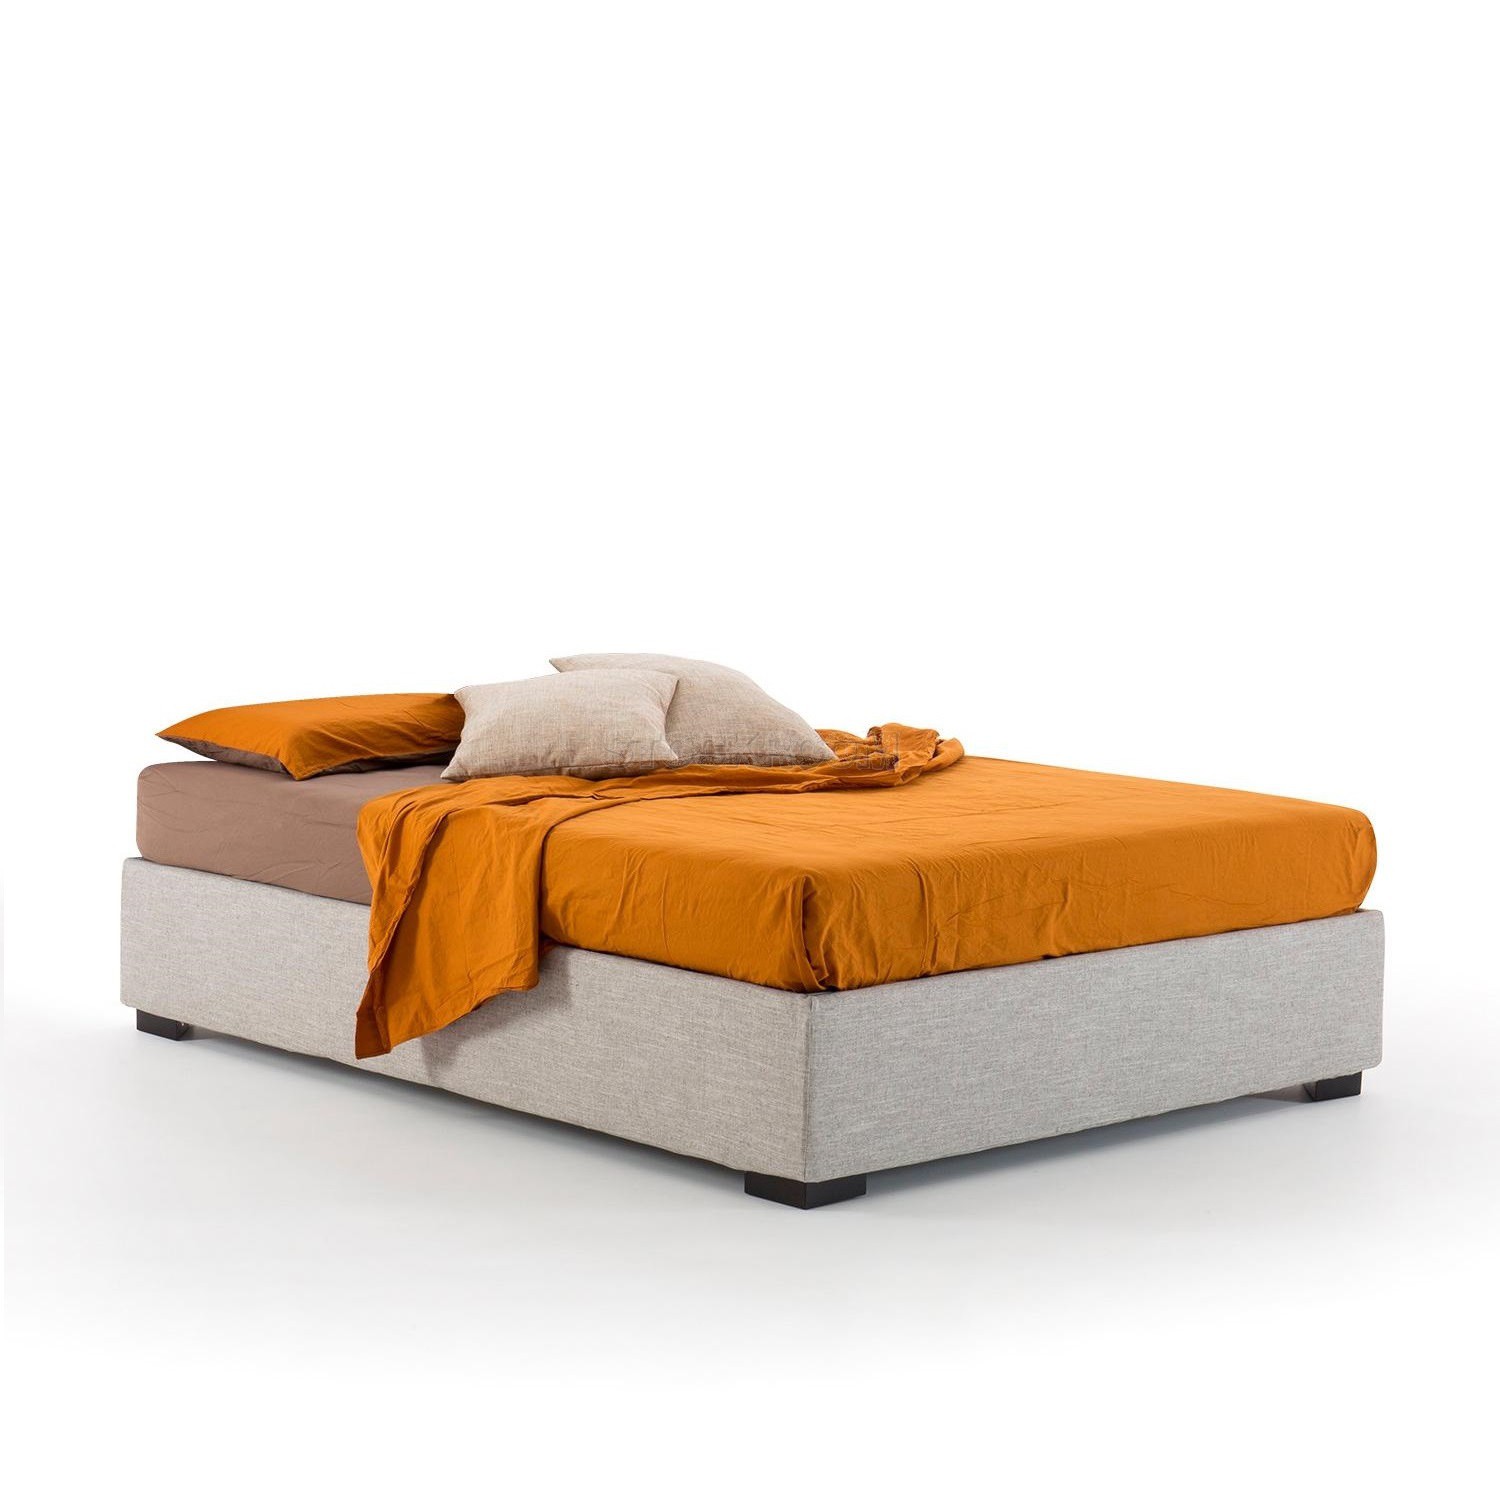 Adsila Fabric Upholstered Headboardless Storage Bed Frame 